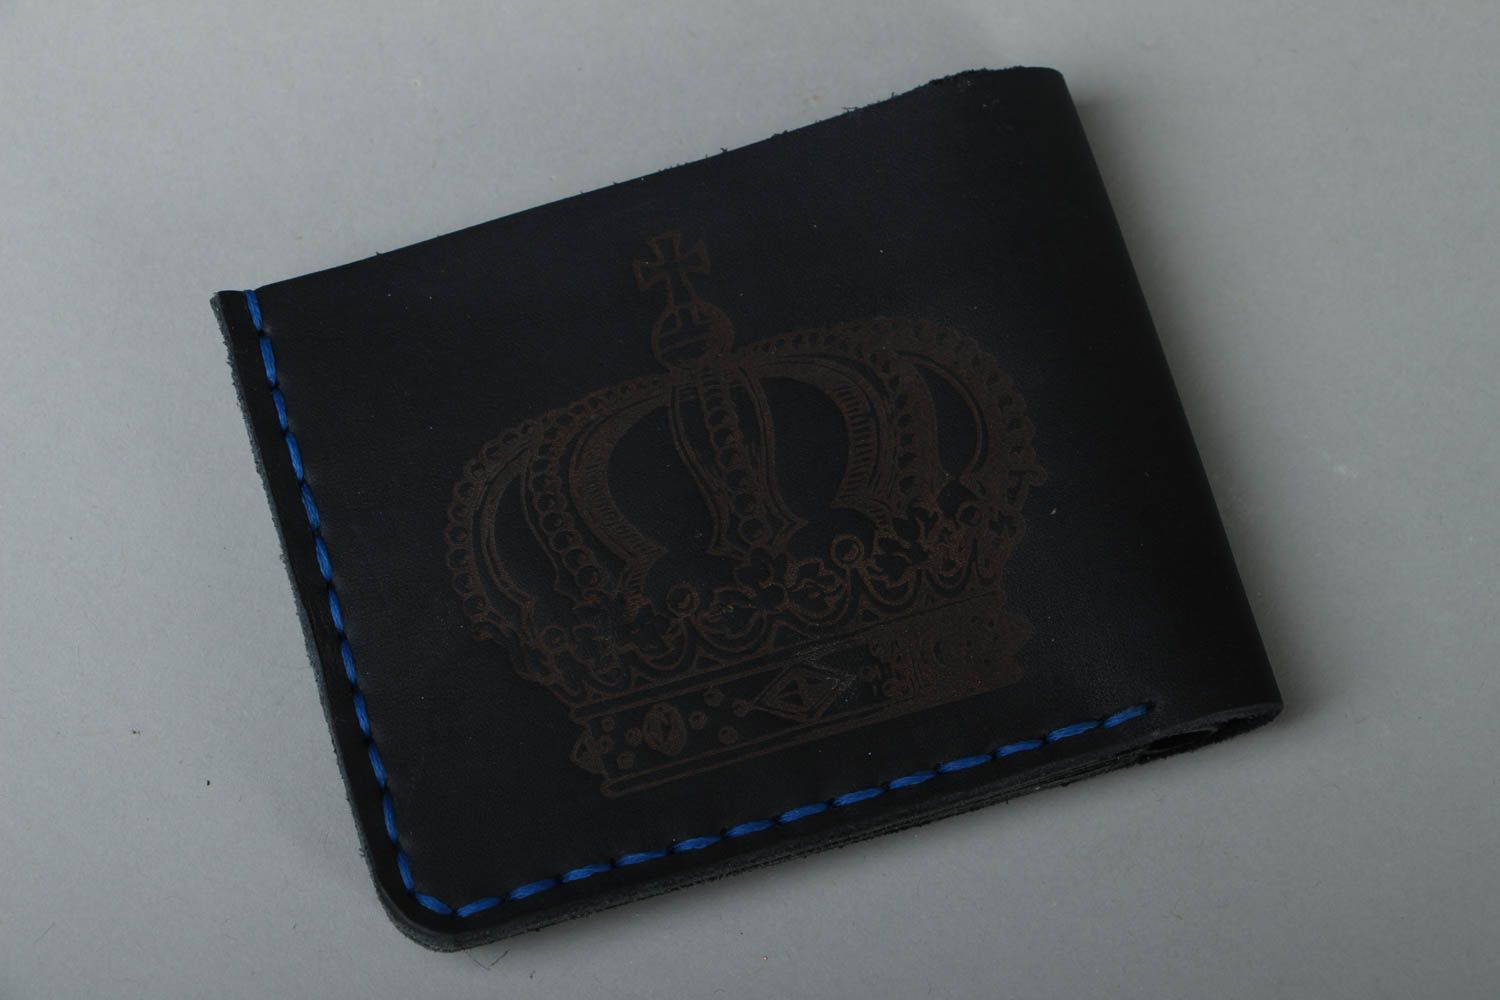 Handmade leather wallet photo 1